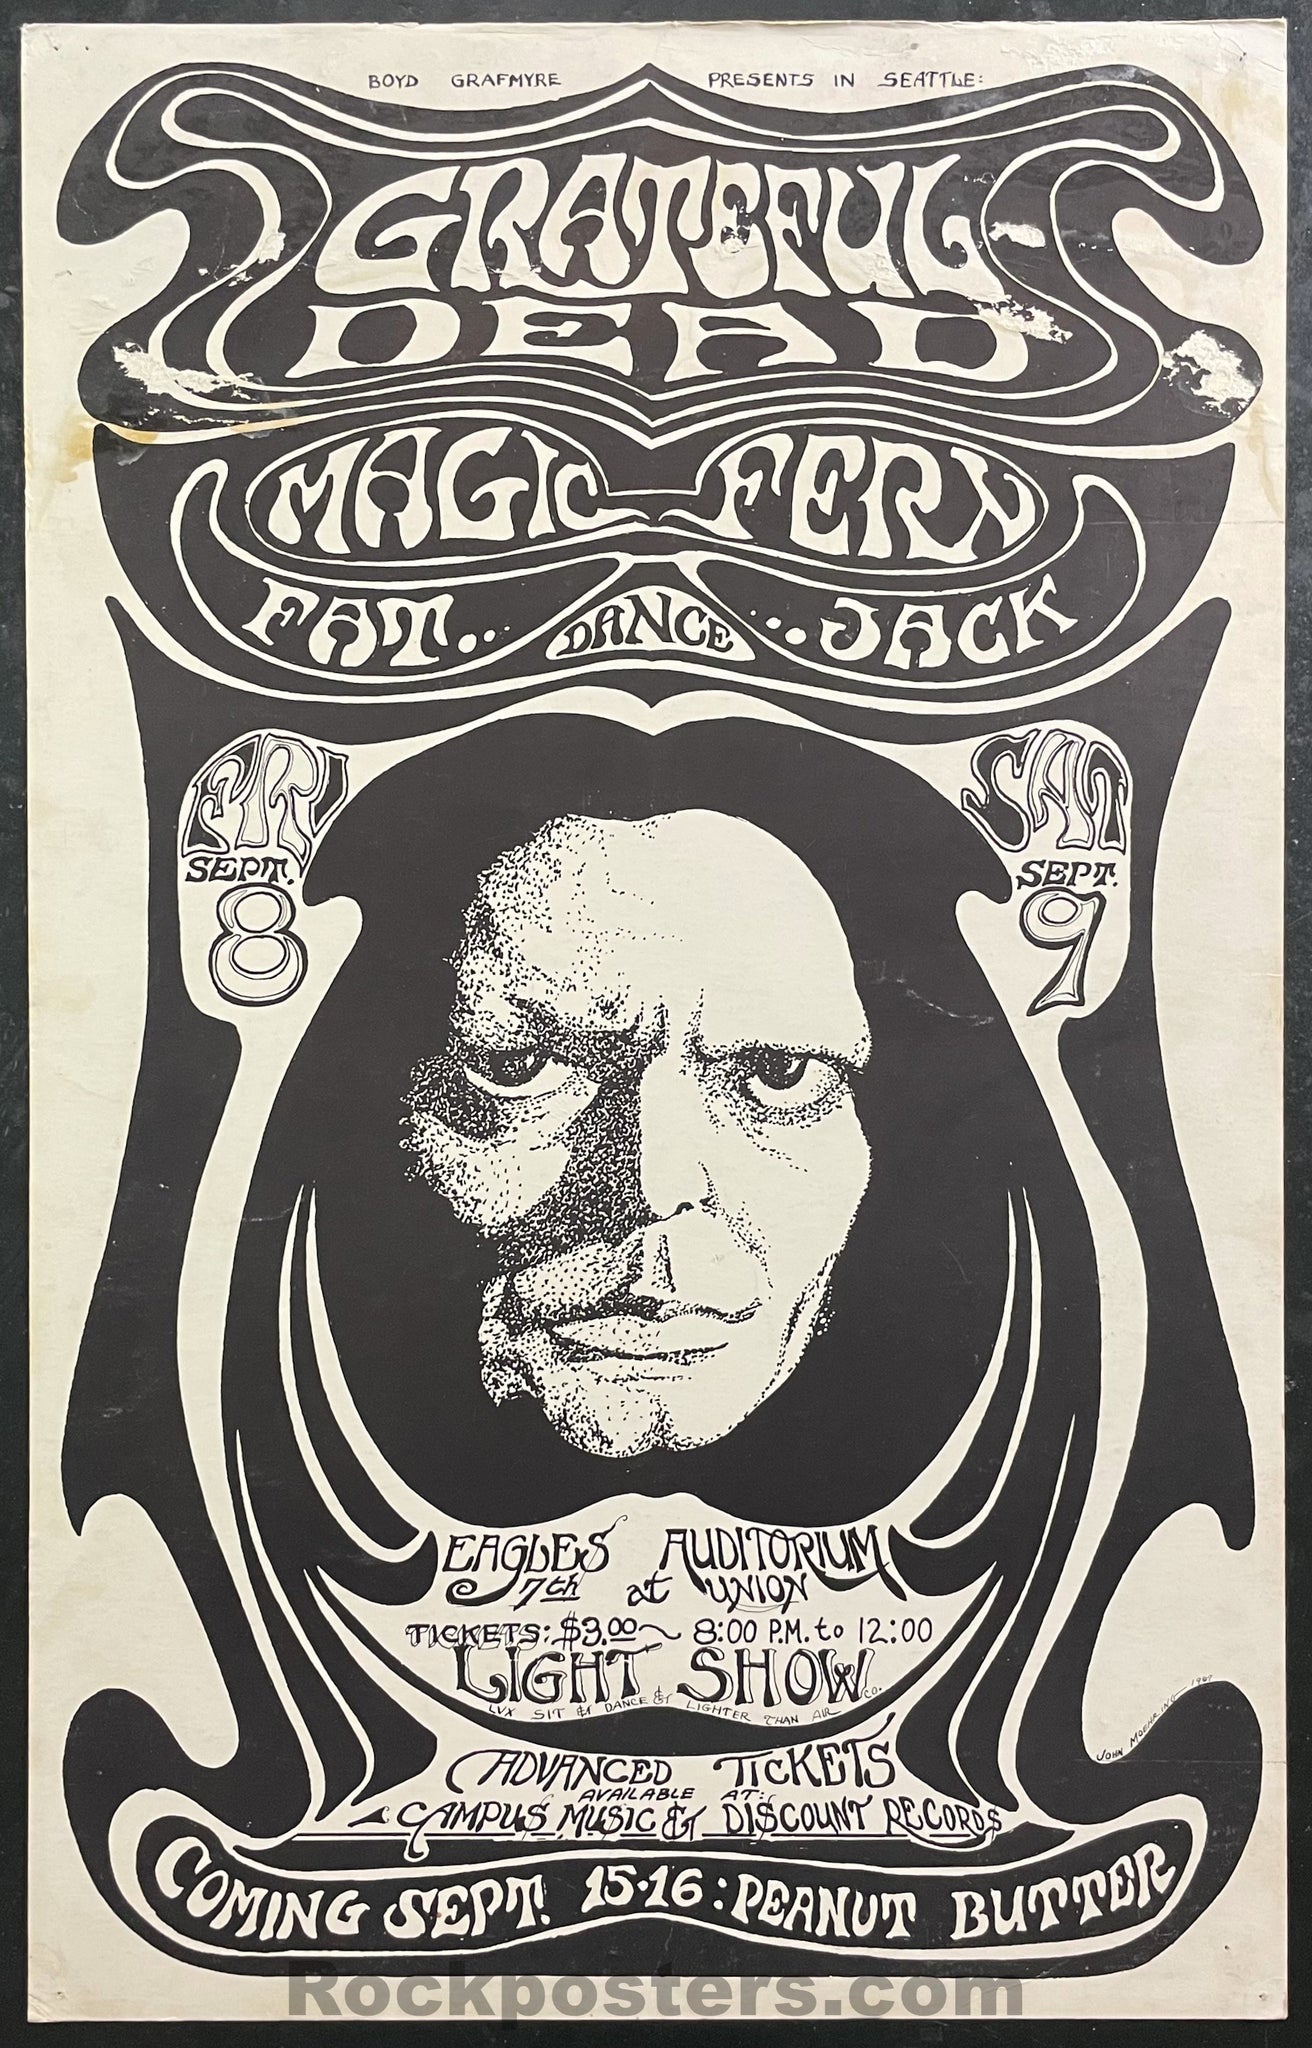 AUCTION - Grateful Dead - John Moehring - 1967 Poster - Seattle Eagles Auditorium - Very Good